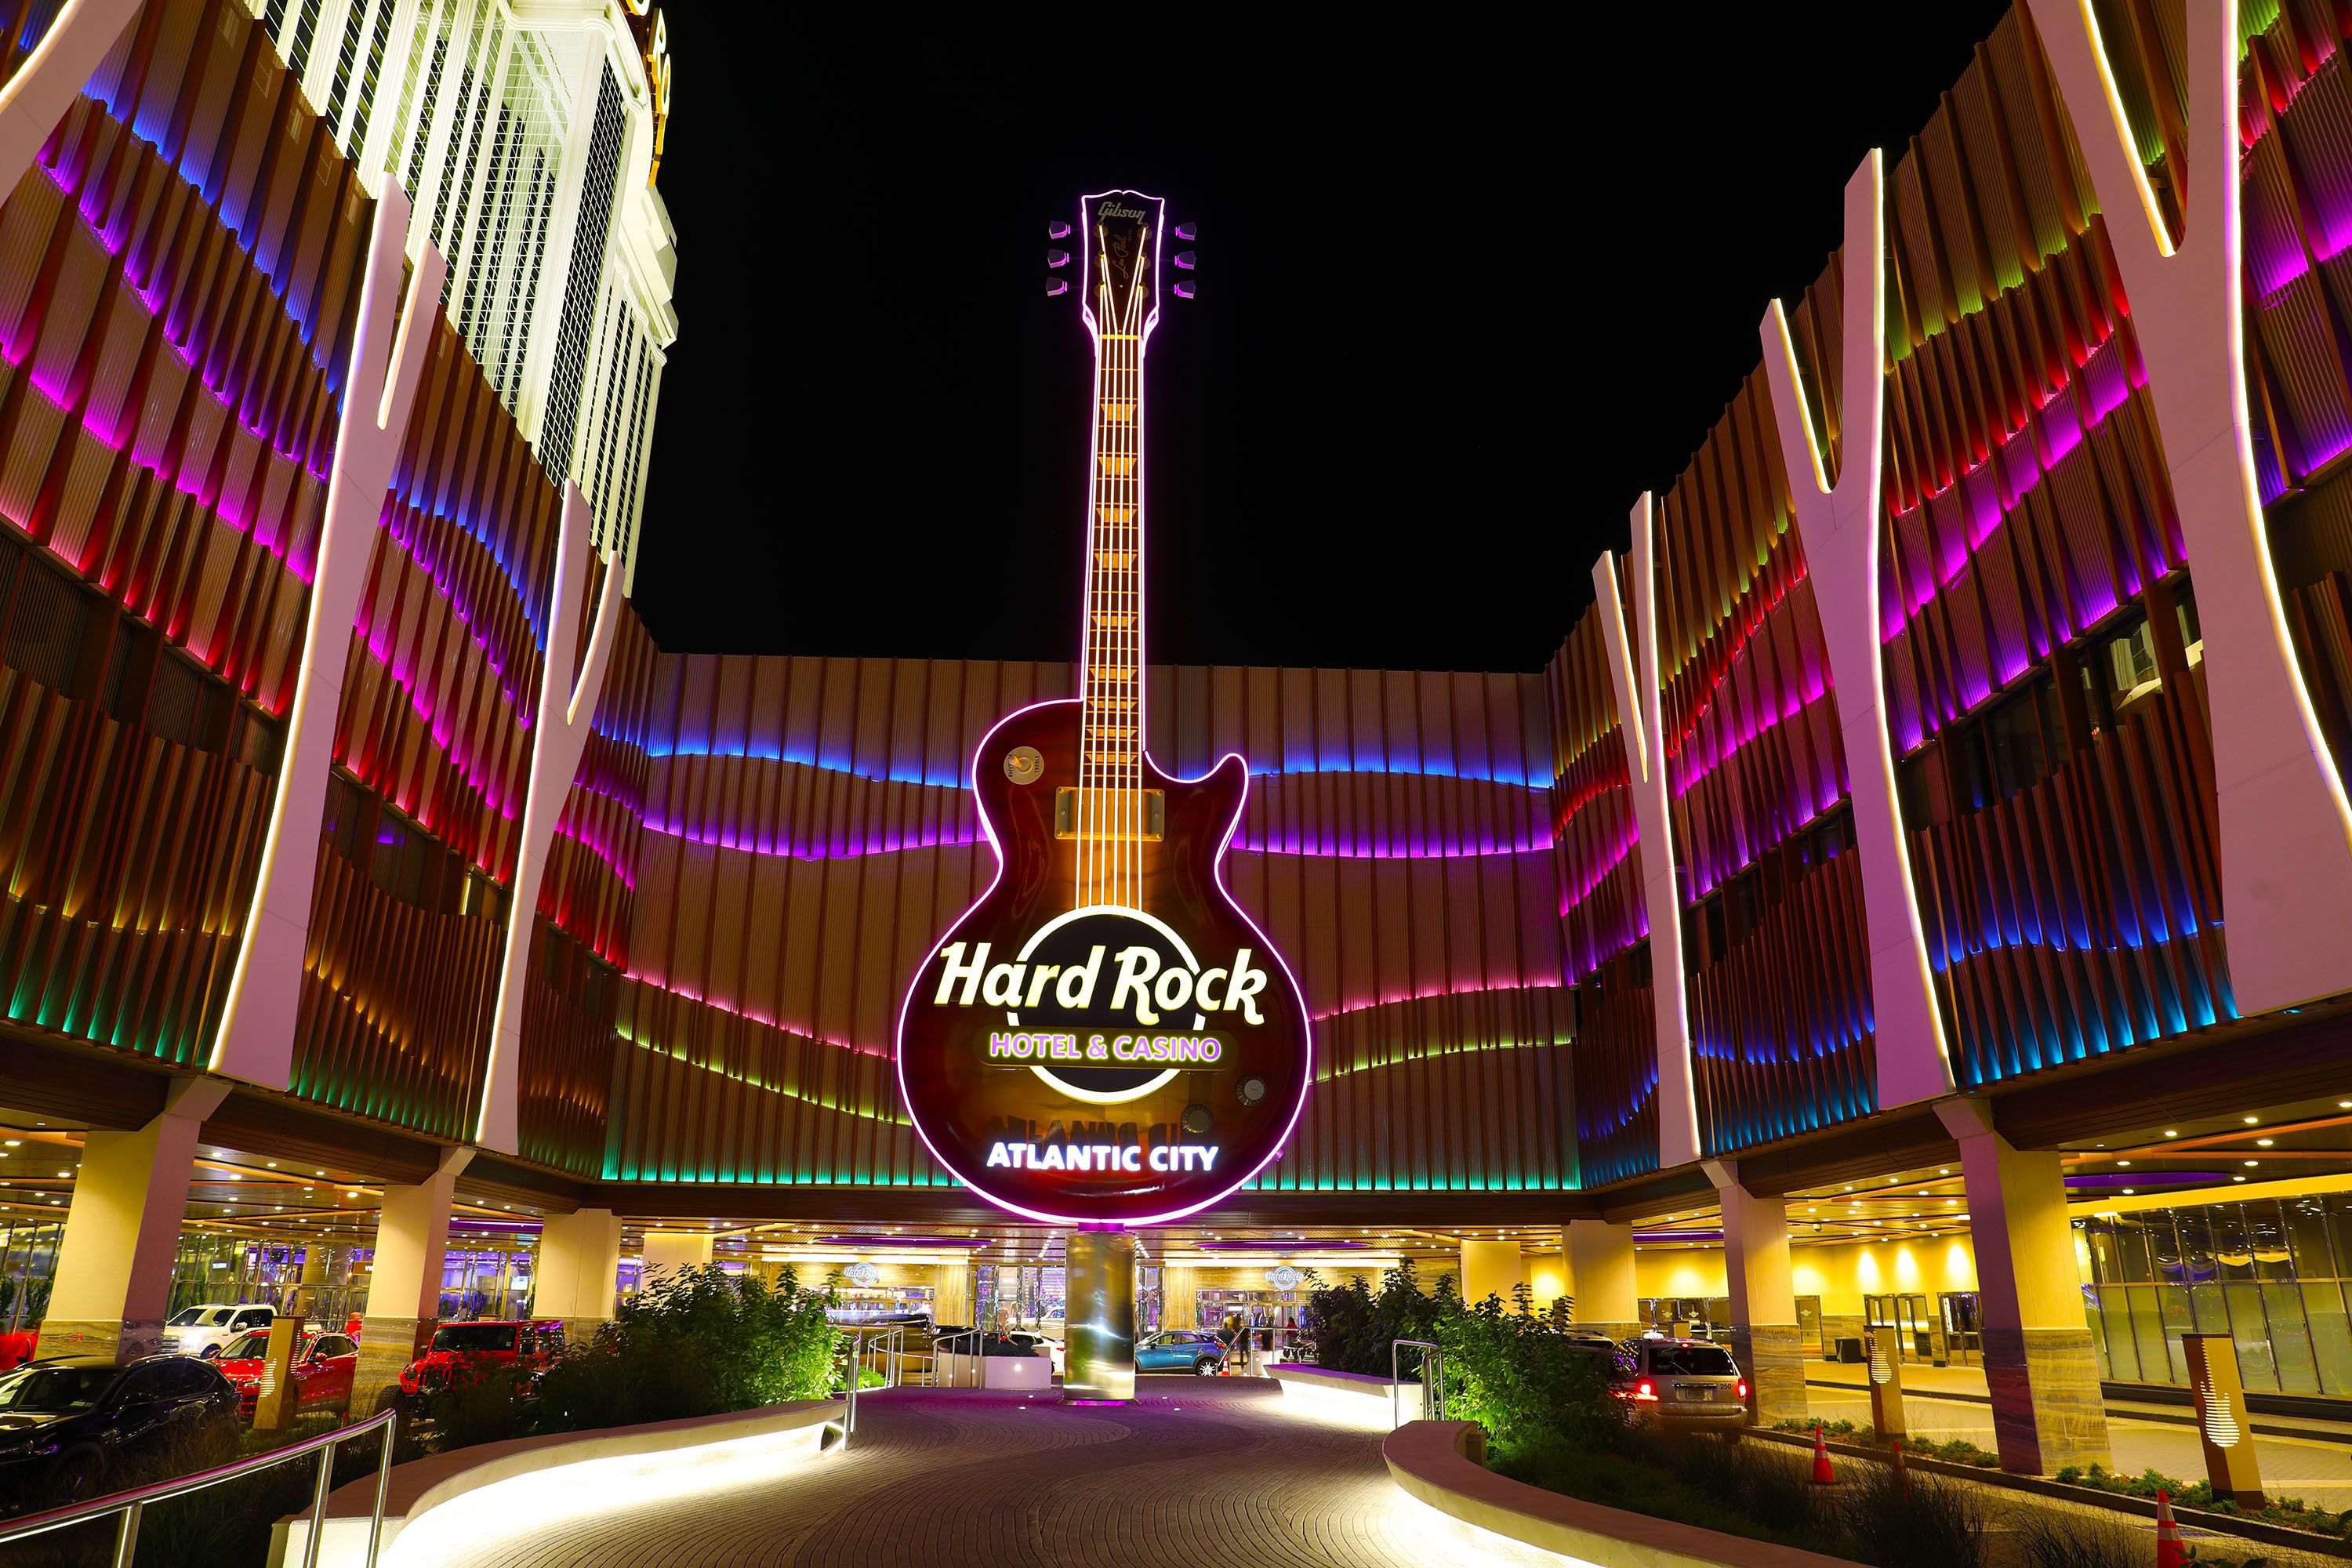 Building view of Hard Rock Hotel & Casino Atlantic City